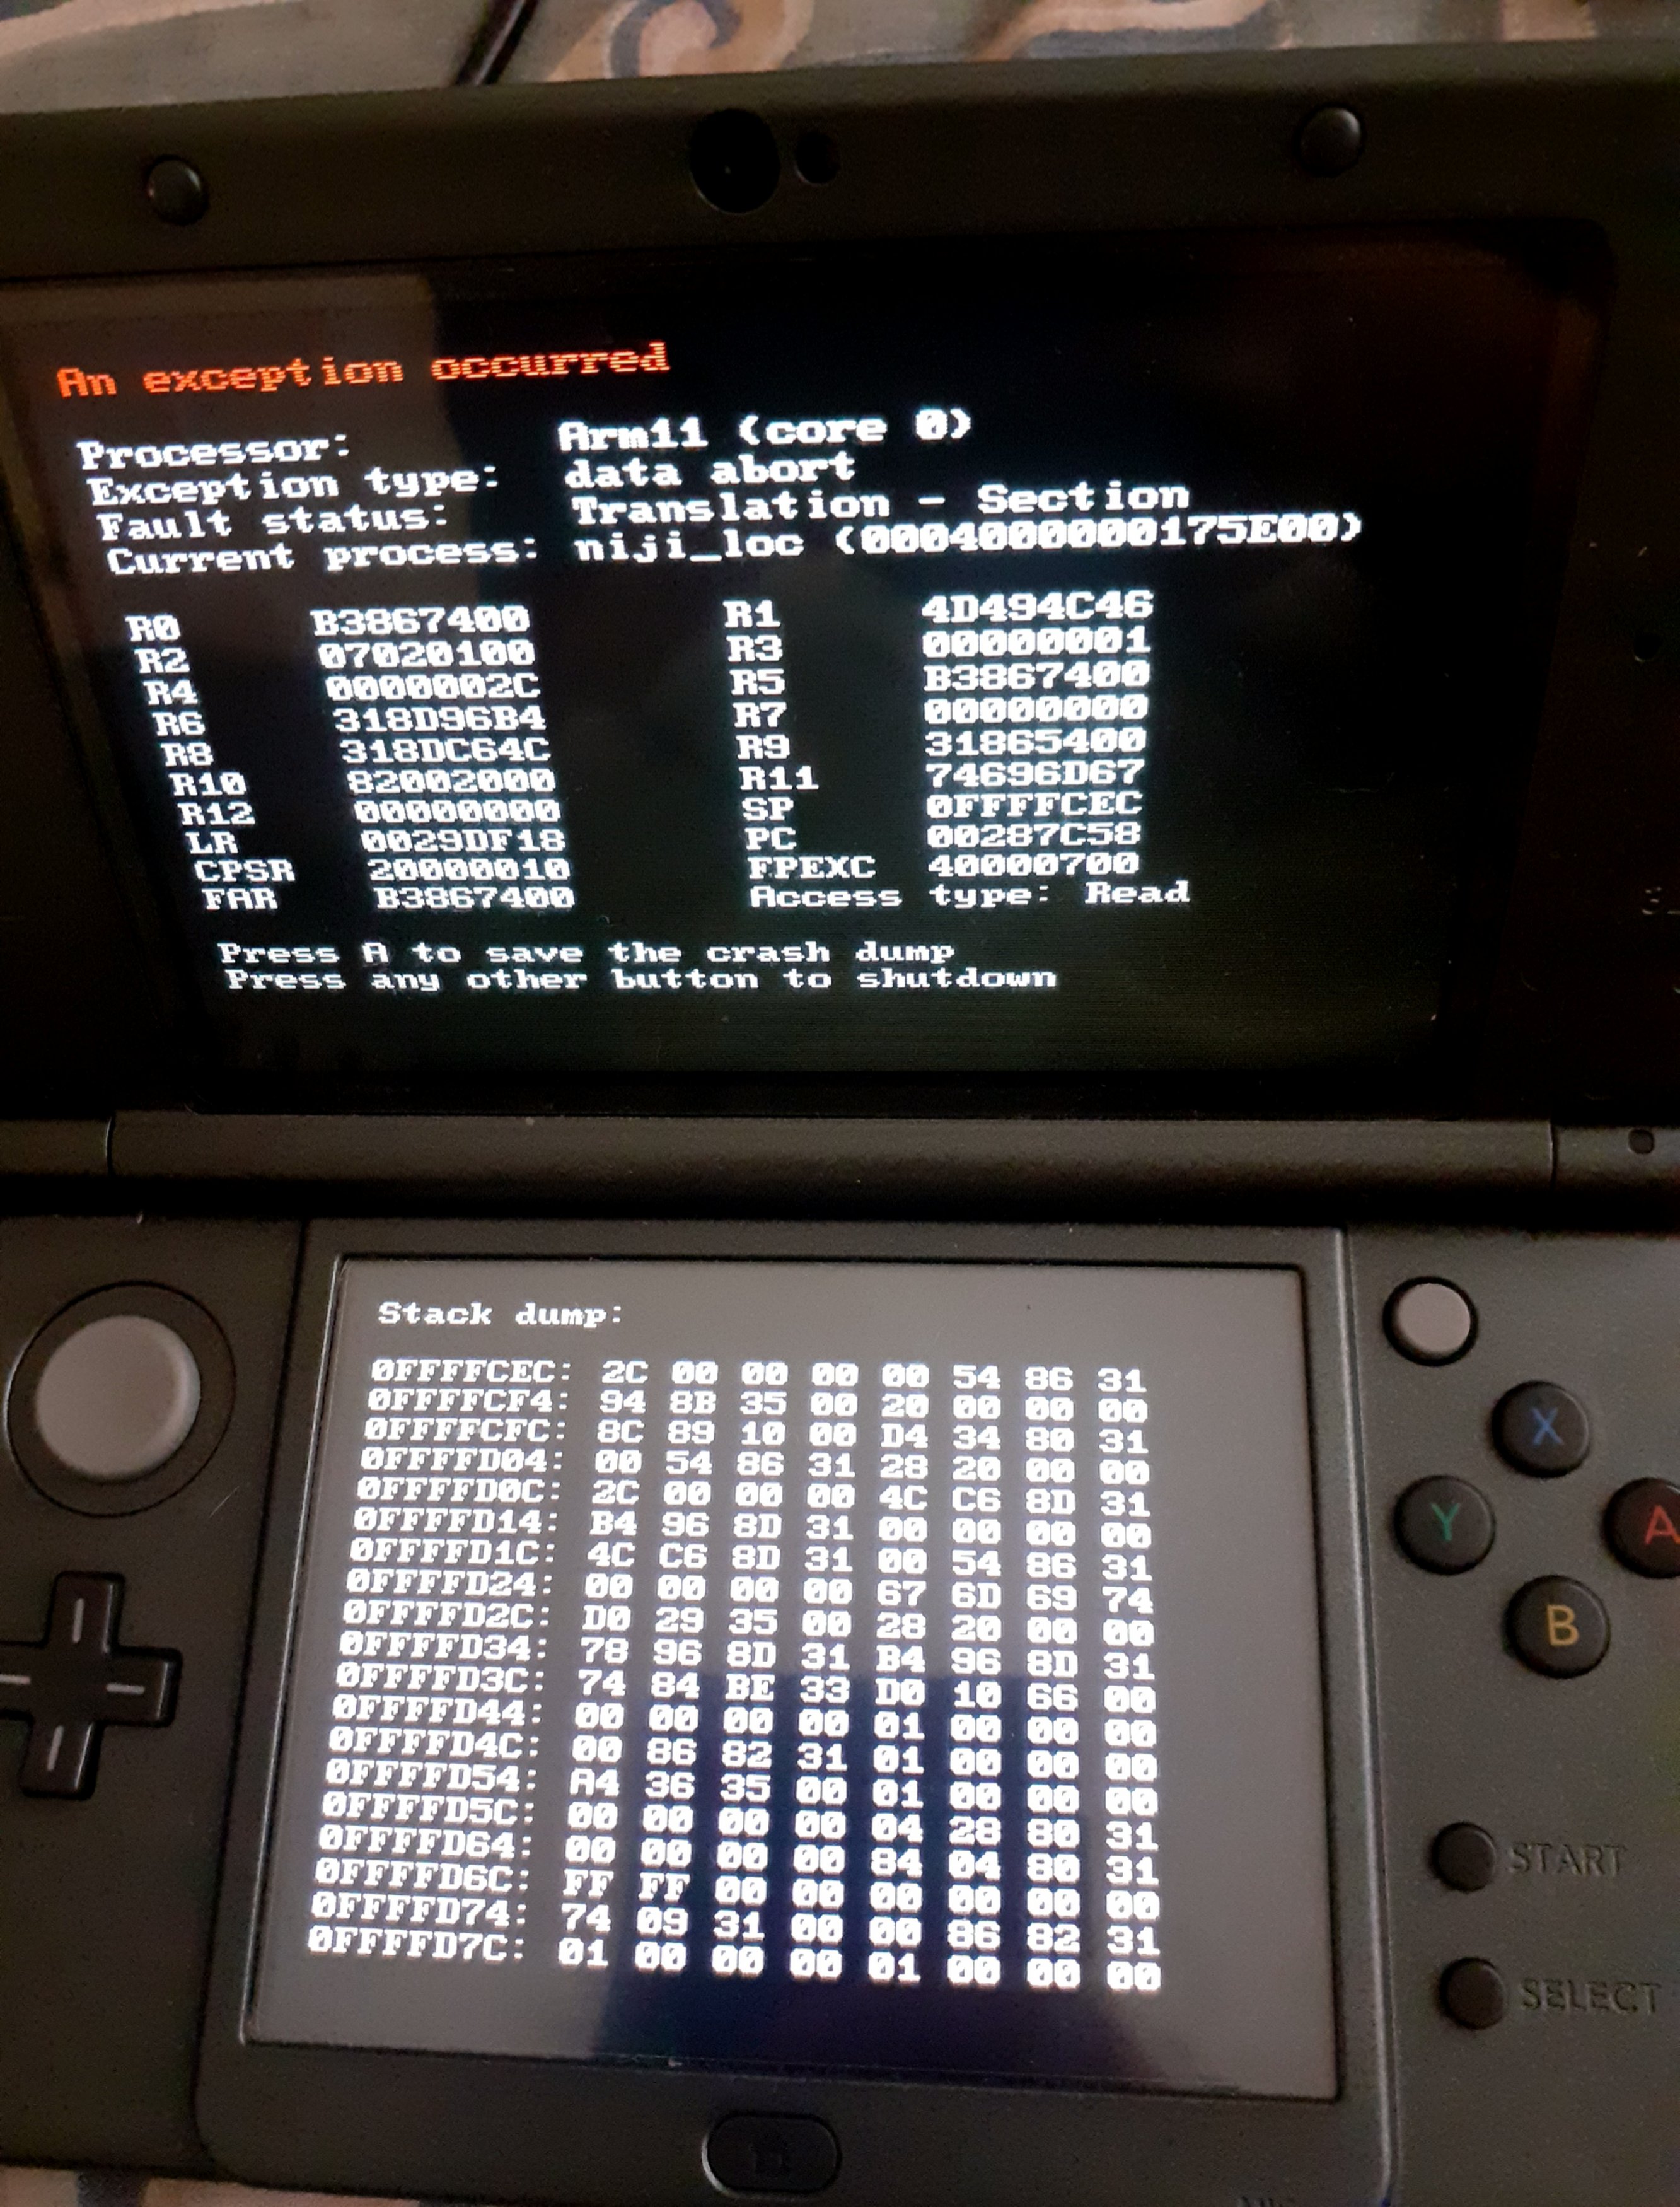 Coverted r4 3ds for sd, Accessoires Nintendo DS, Verdun